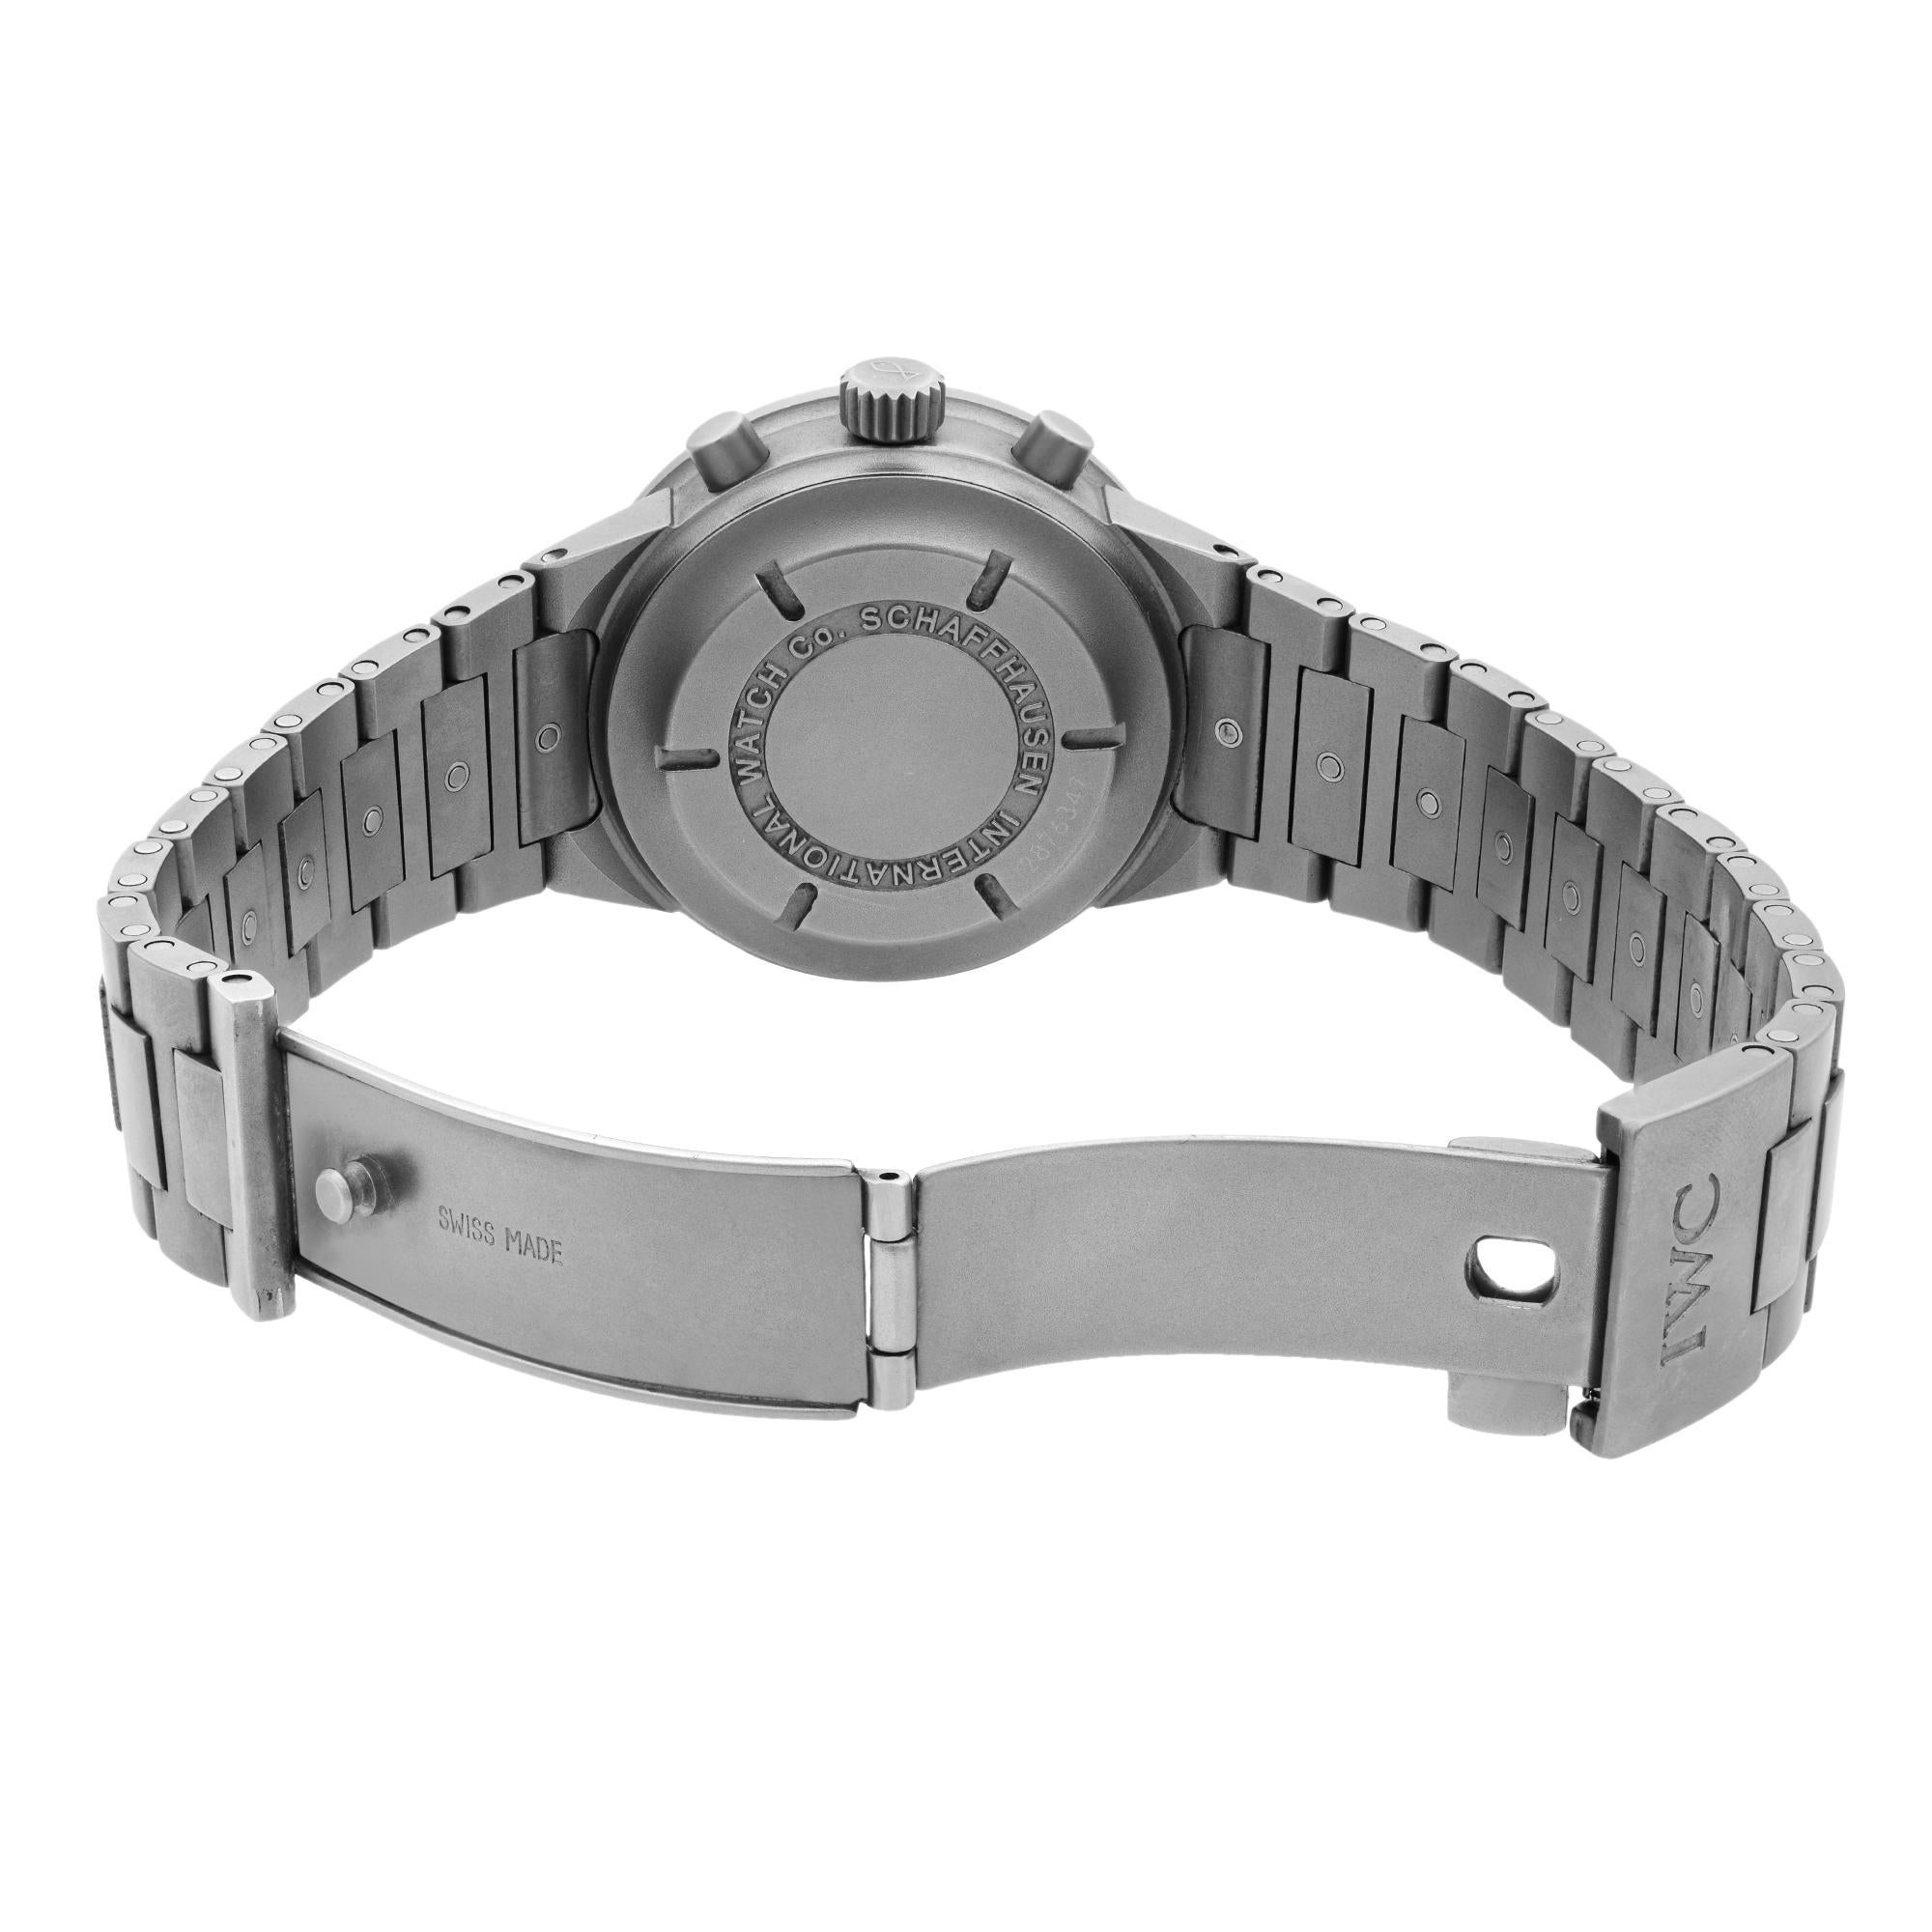 Modern IWC GST Chronograph Titanium Day-Date Black Dial Automatic Men's Watch IW3707-03